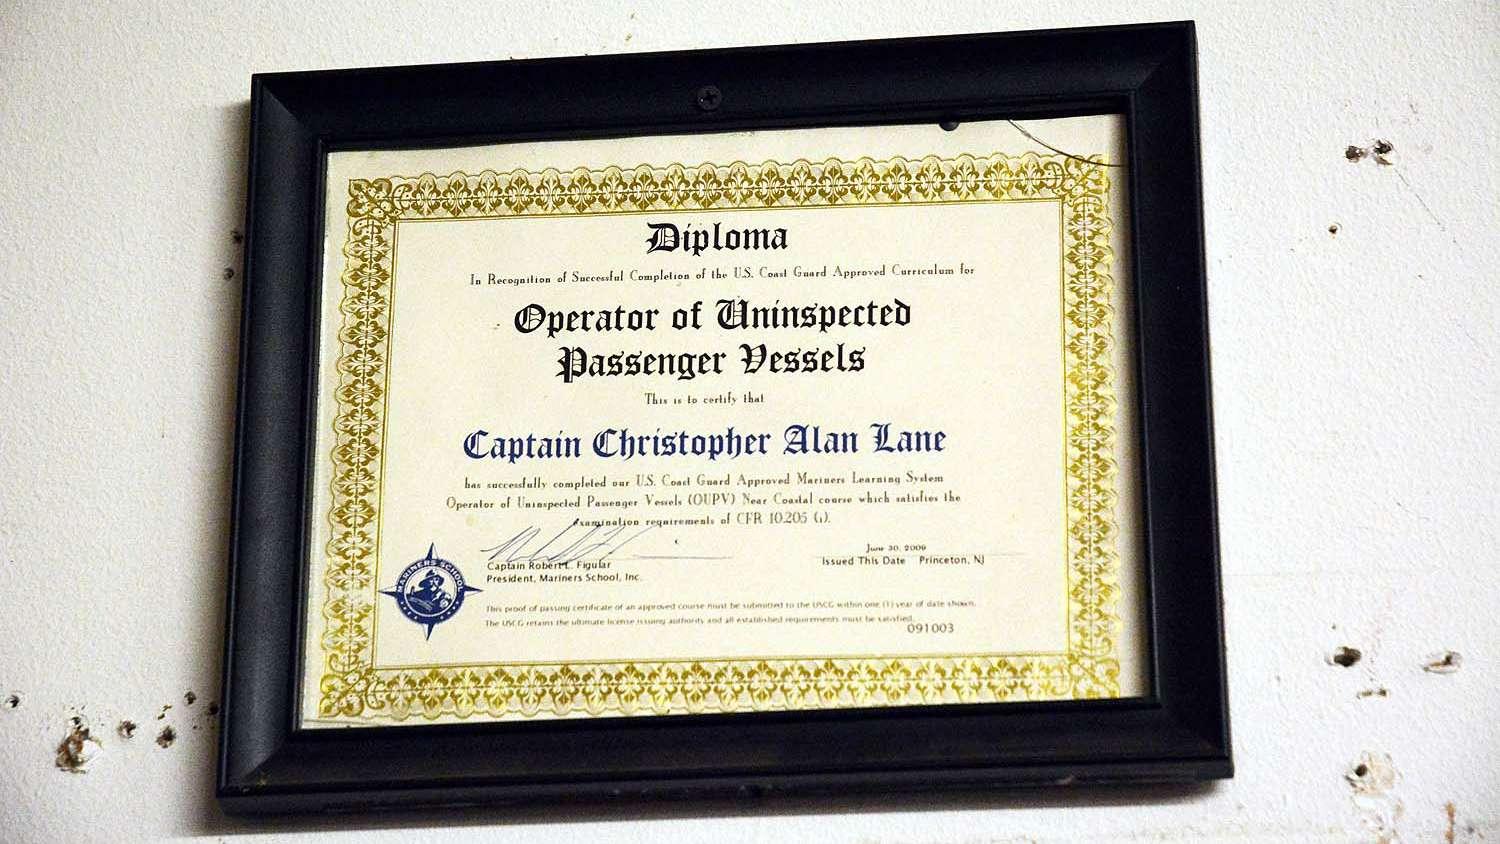 This certificate is more official business than tournament keepsake. Lane got his U.S. Coast Guard captainâs license in 2009. In official terms heâs approved as an Operator of Uninspected Passenger Vessels. 